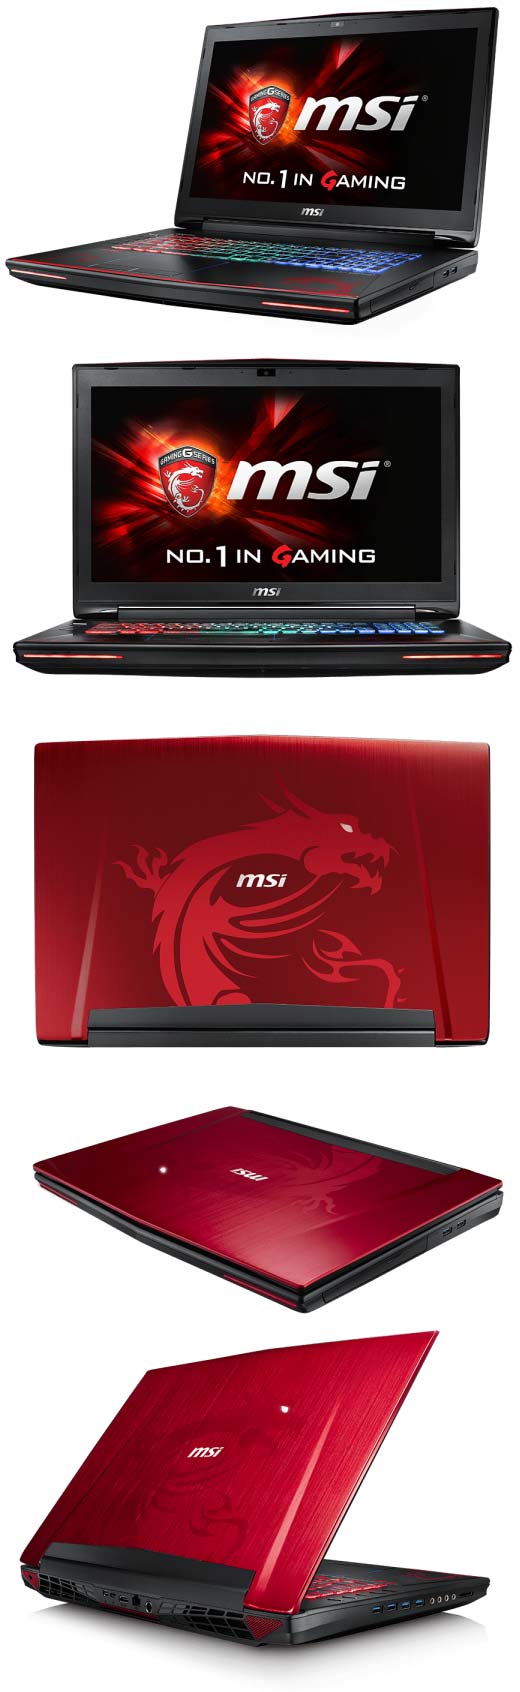 На фото можно увидеть ноутбук MSI GT72S 6QF Dominator Pro G Dragon Edition